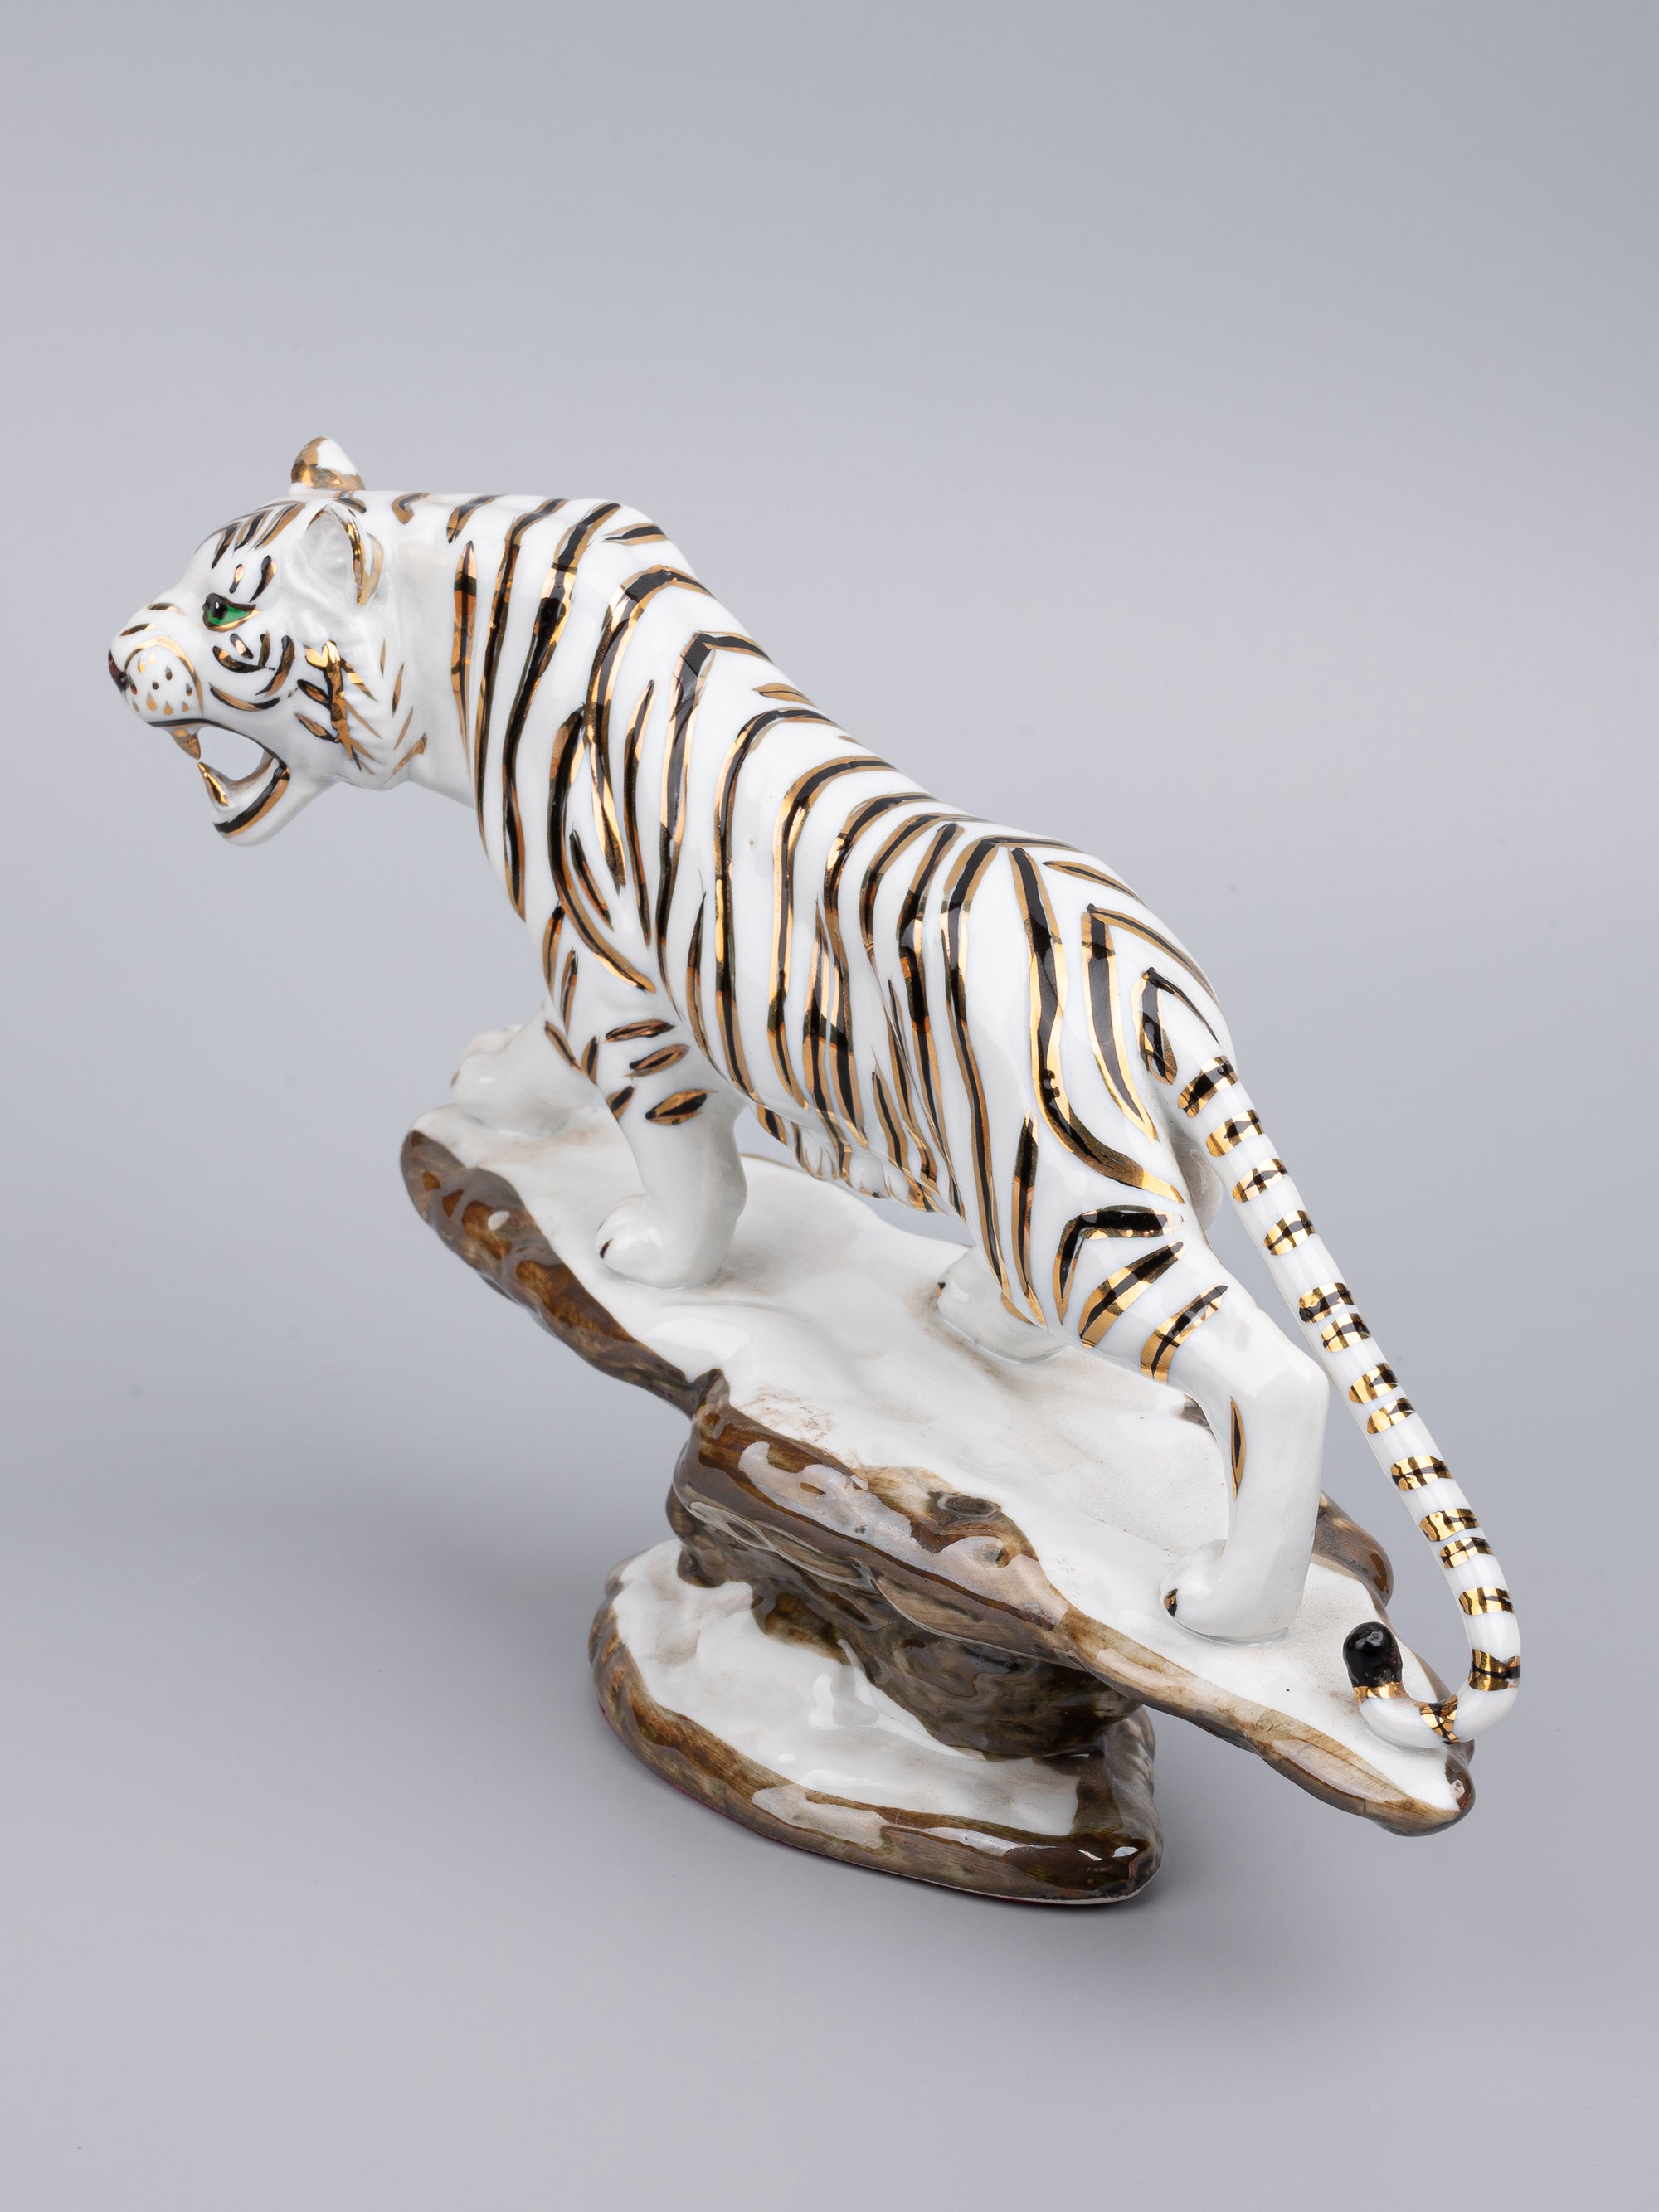 Glass Artifact, White Roaring Tiger on Mountain Top - The Heritage Artifacts